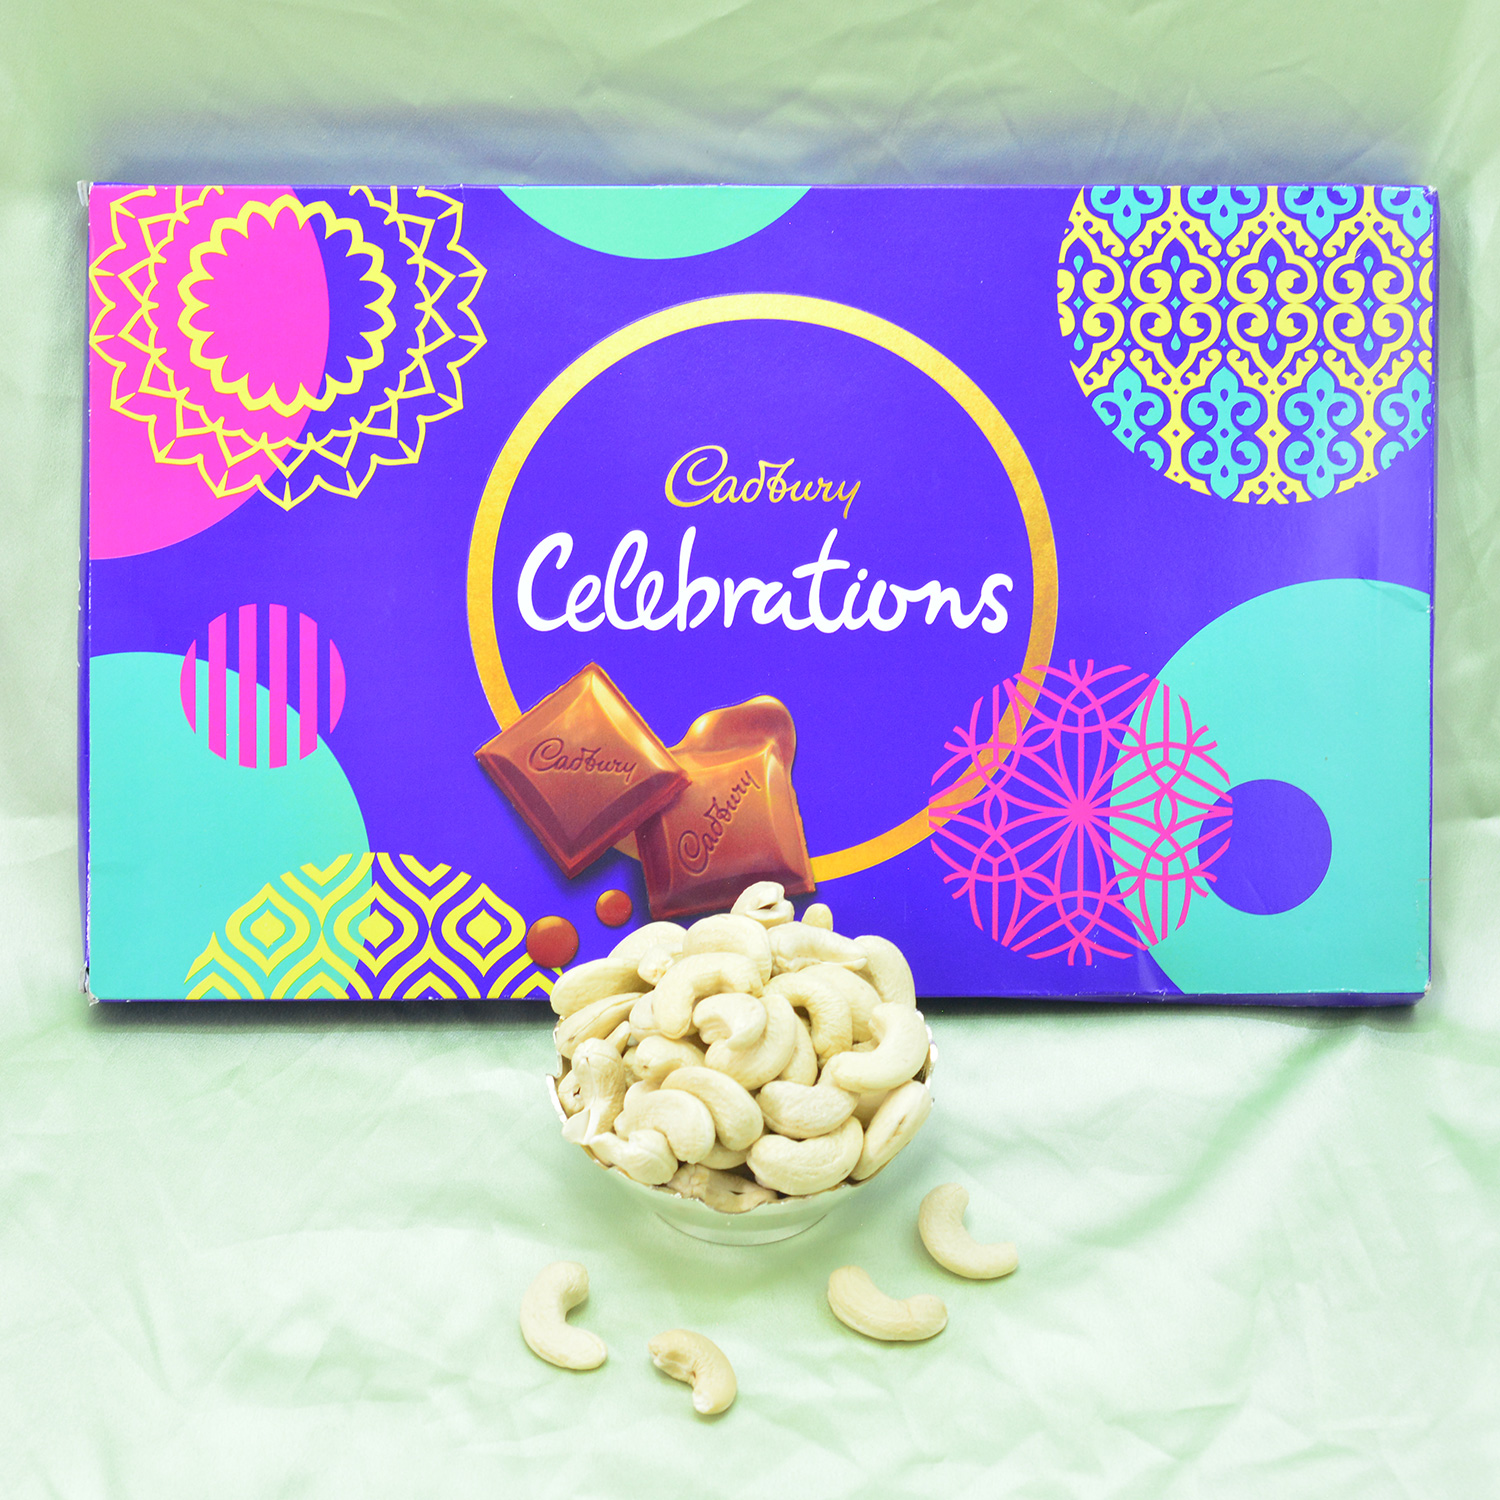 Cadbury Celebration Chocolate Packs with Amazing Tasty Kaju Dry Fruit